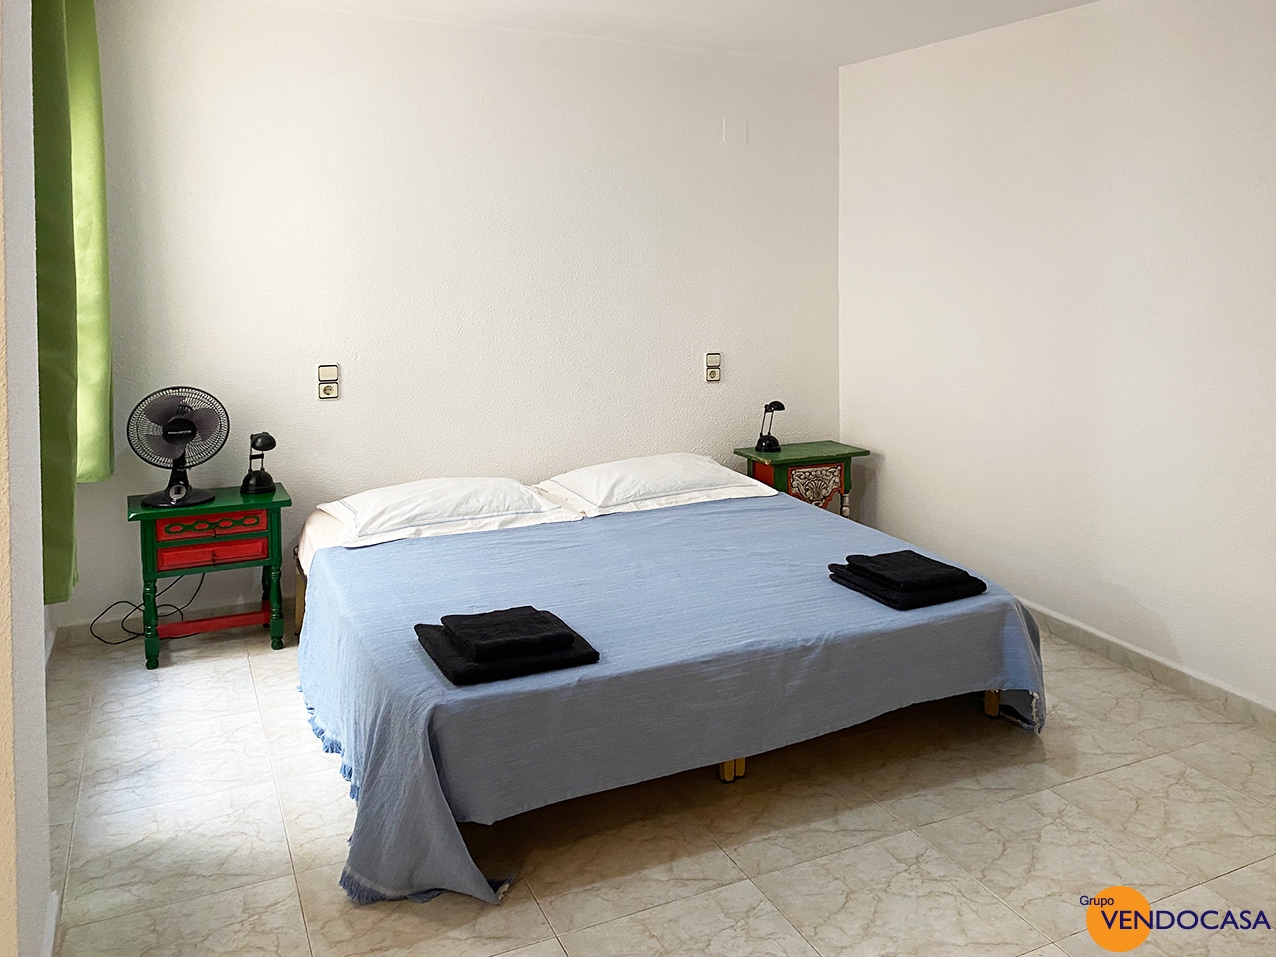 3 bedroom apartment at Javea port